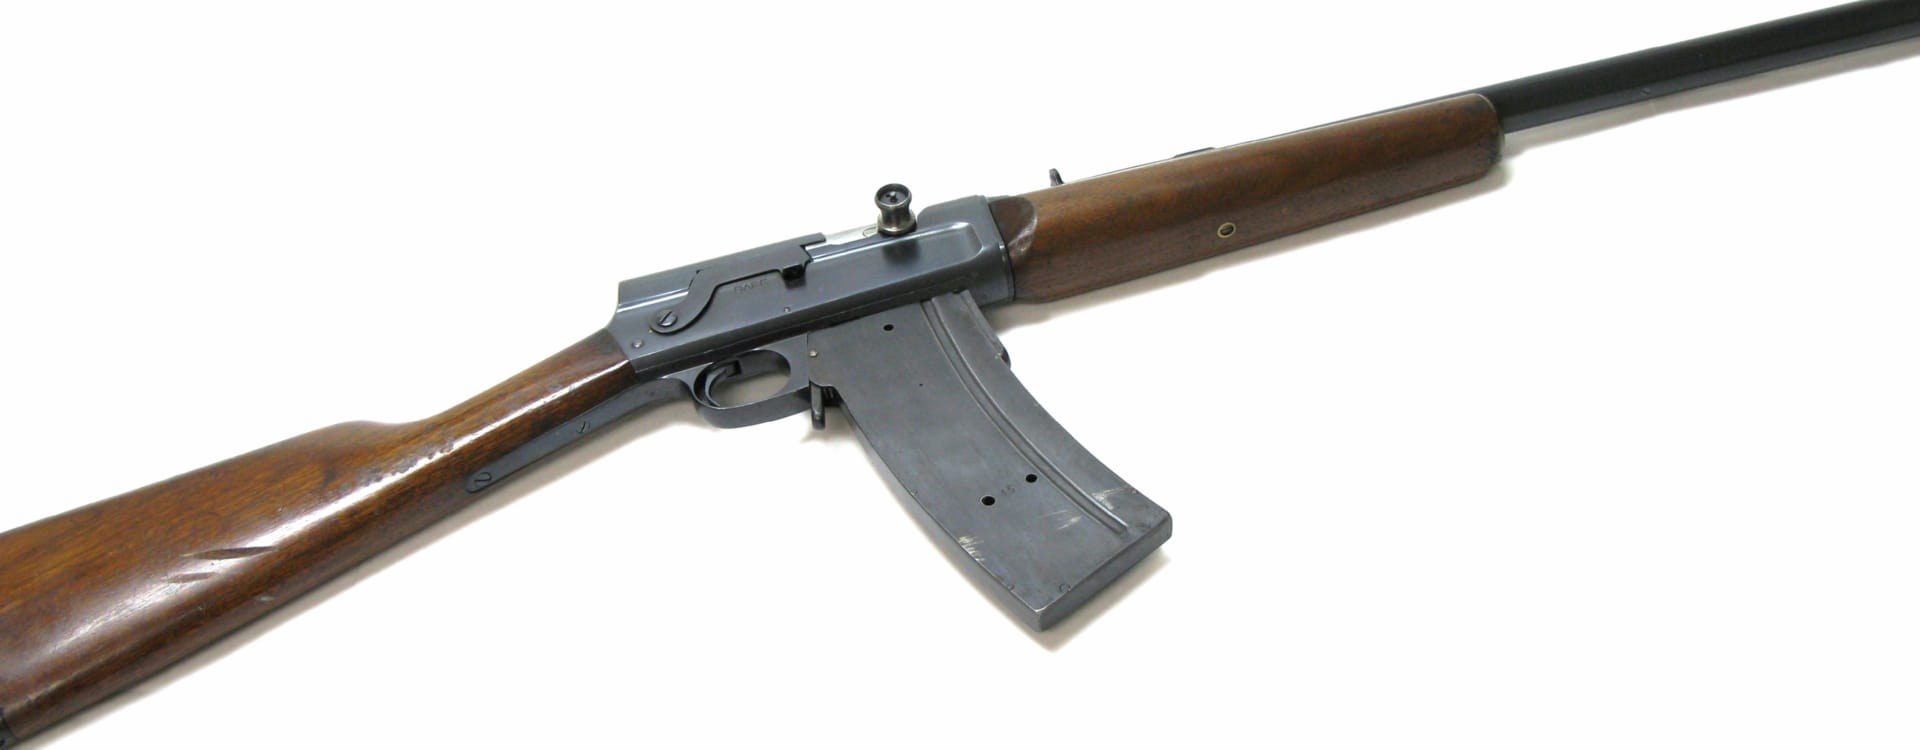 Remington Model 8 Rifle wallpapers HD quality